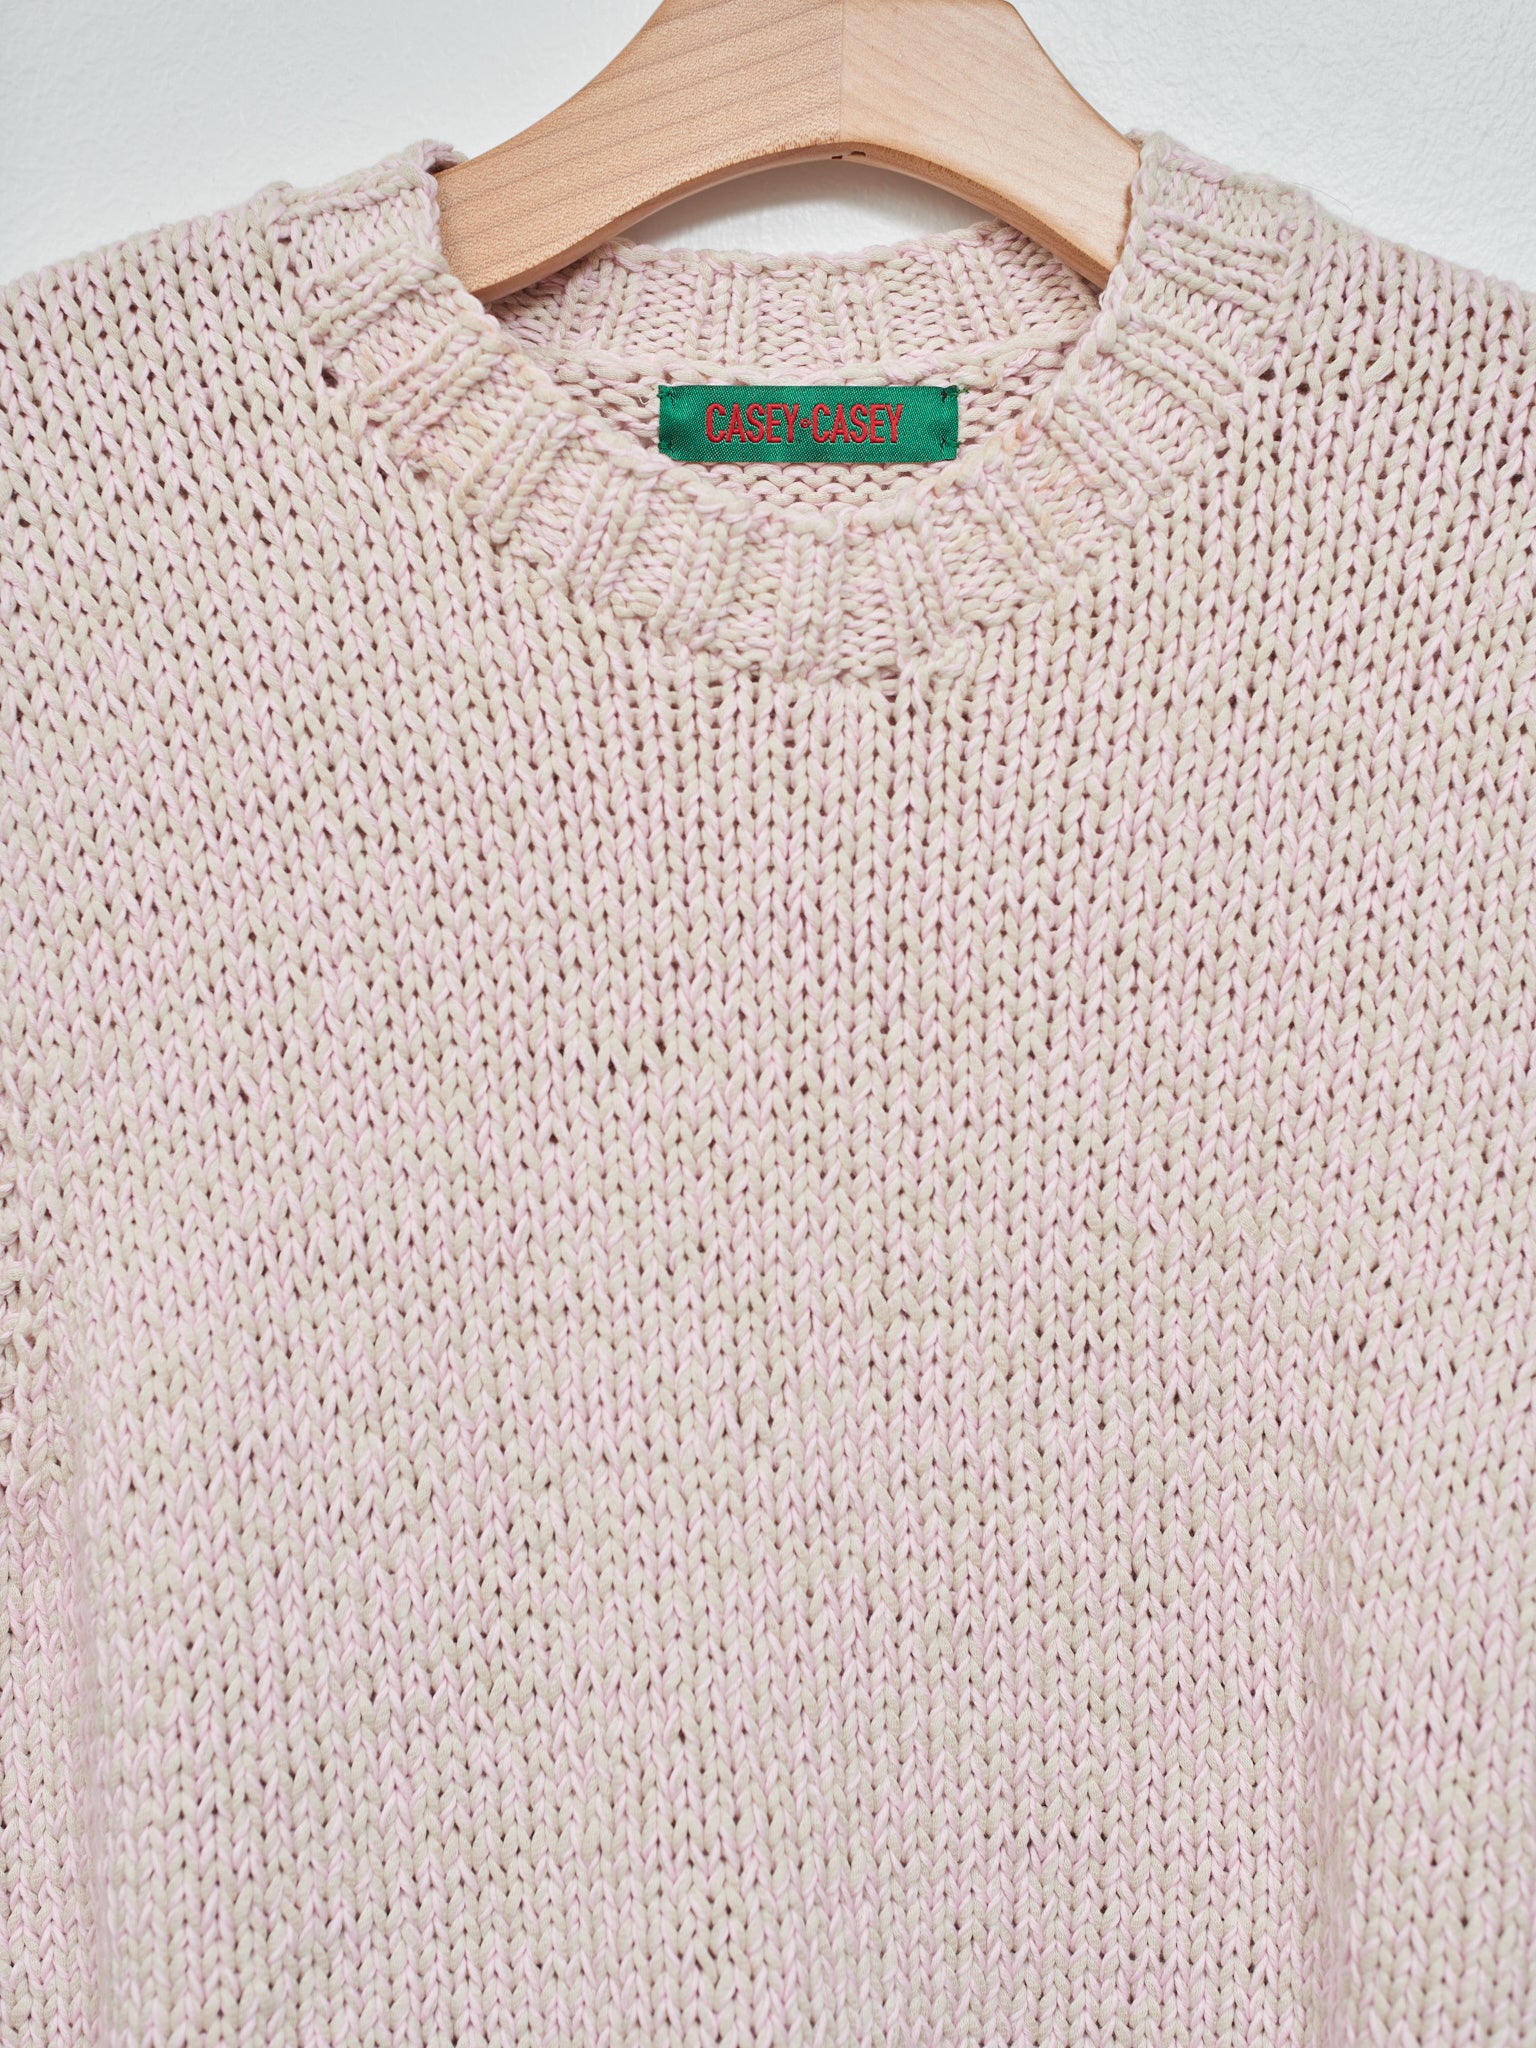 Namu Shop - Casey Casey Sleeveless Sweater - Pink